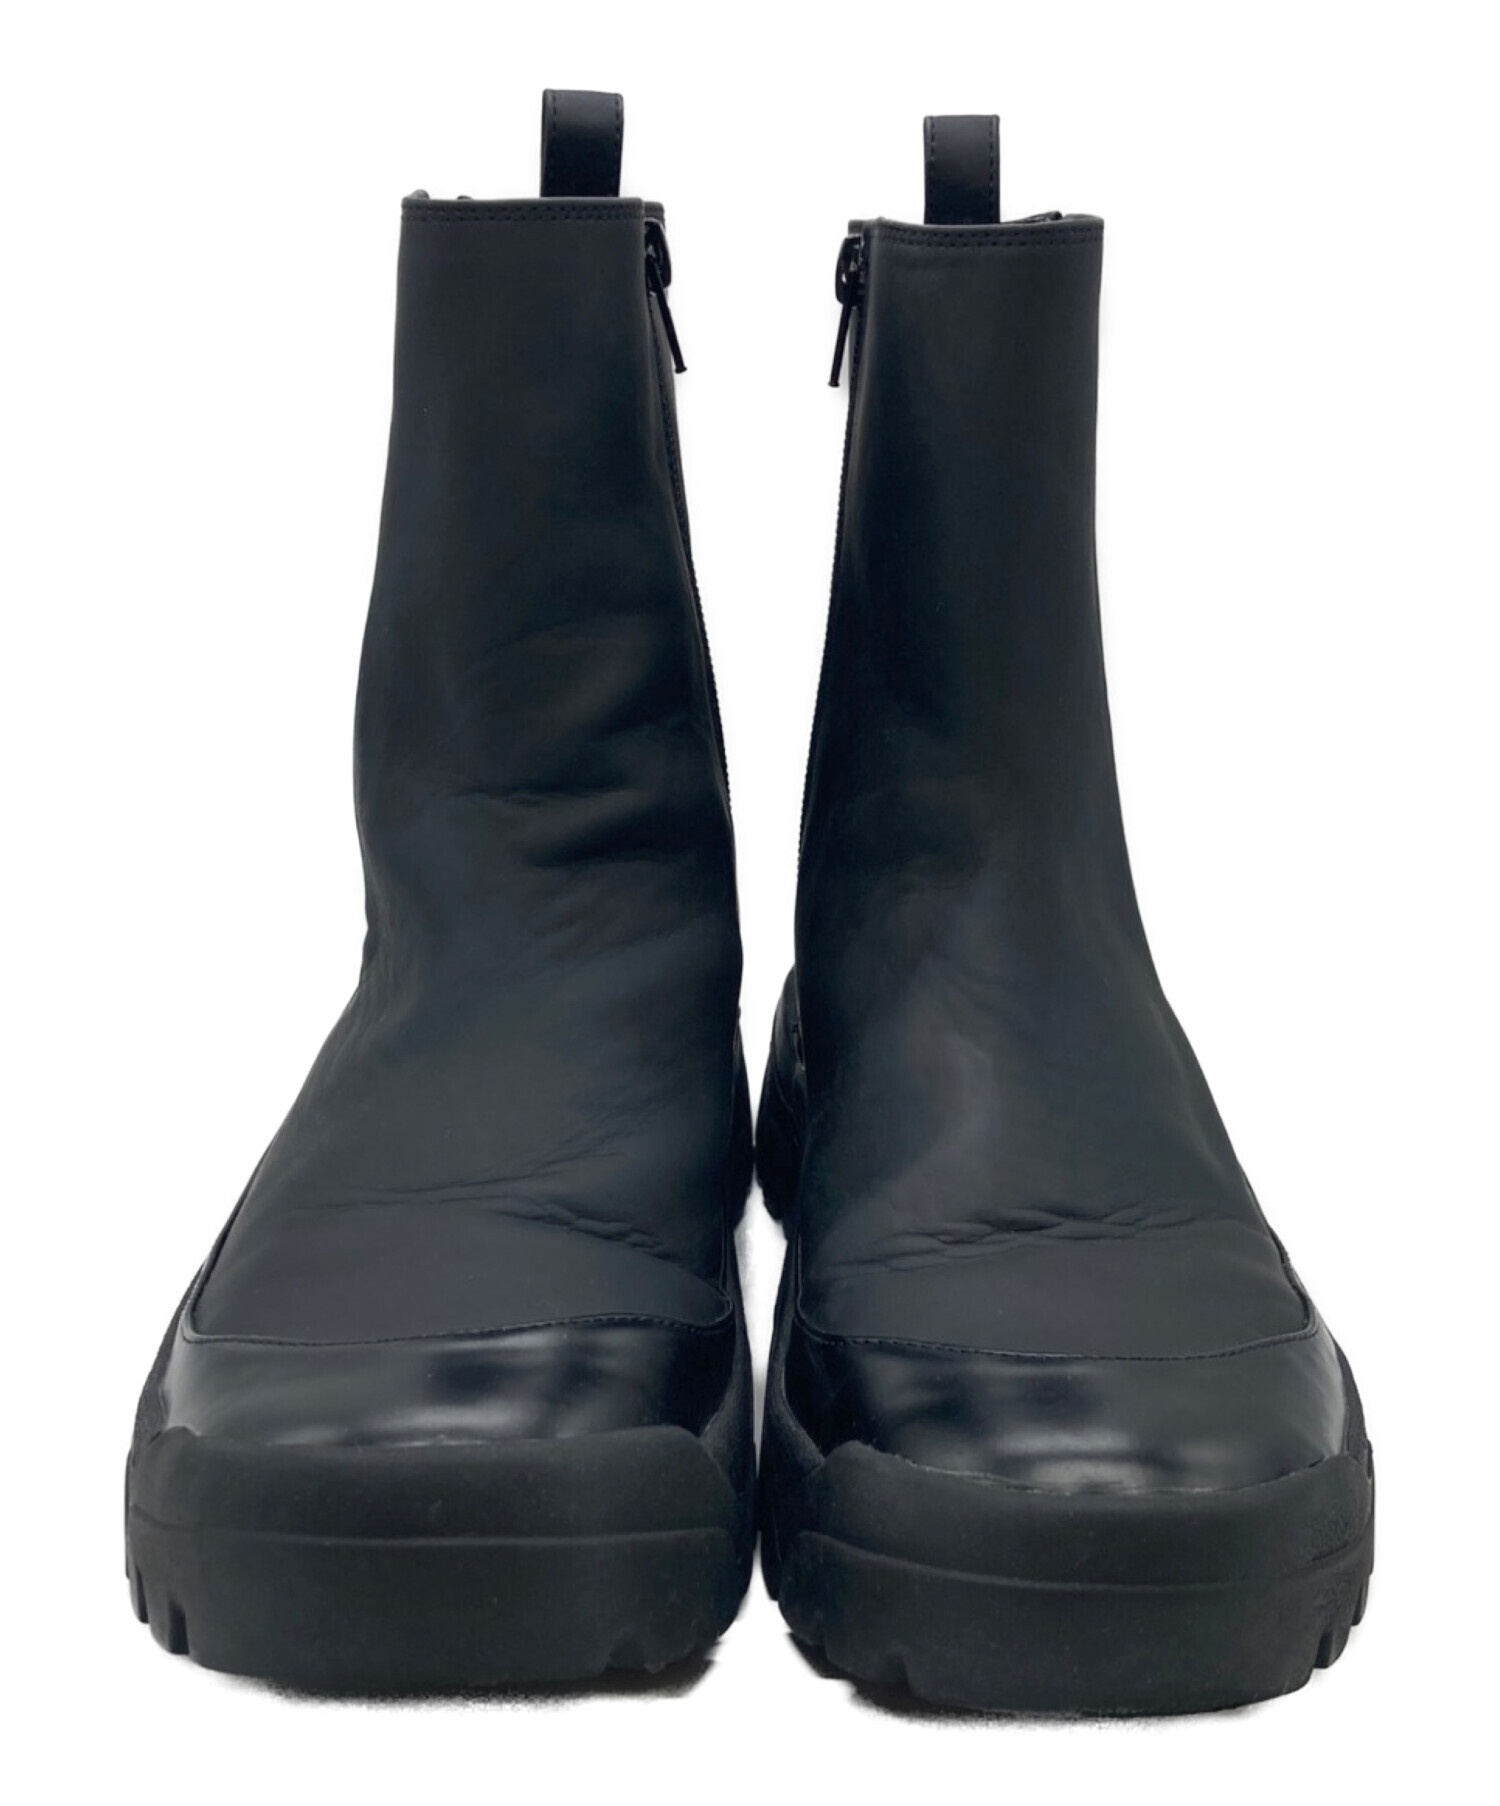 Vibram Chelsea boots サイズ:L-